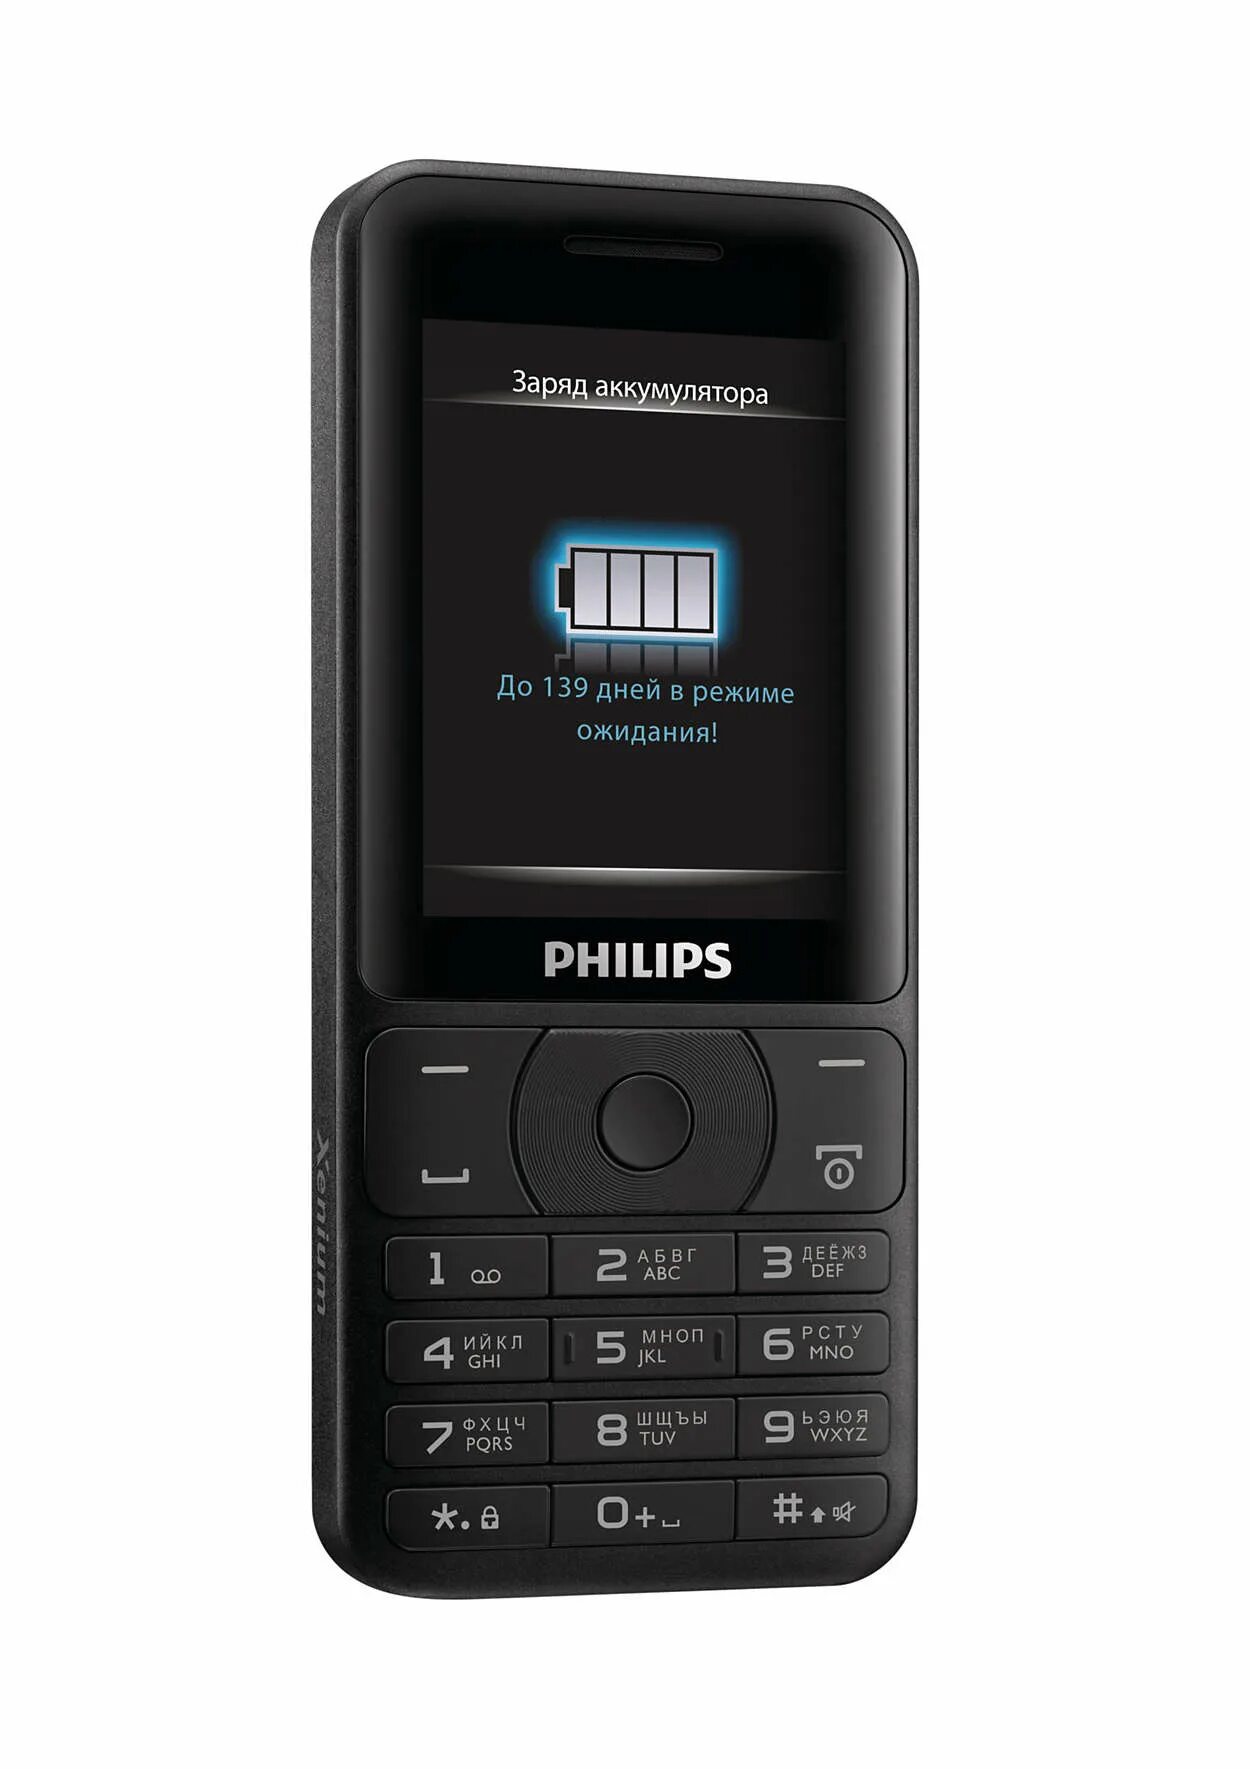 Philips e180 Xenium Black. Philips Xenium e180. Сотовый телефон Philips Xenium e180. Philips Xenium у 180.